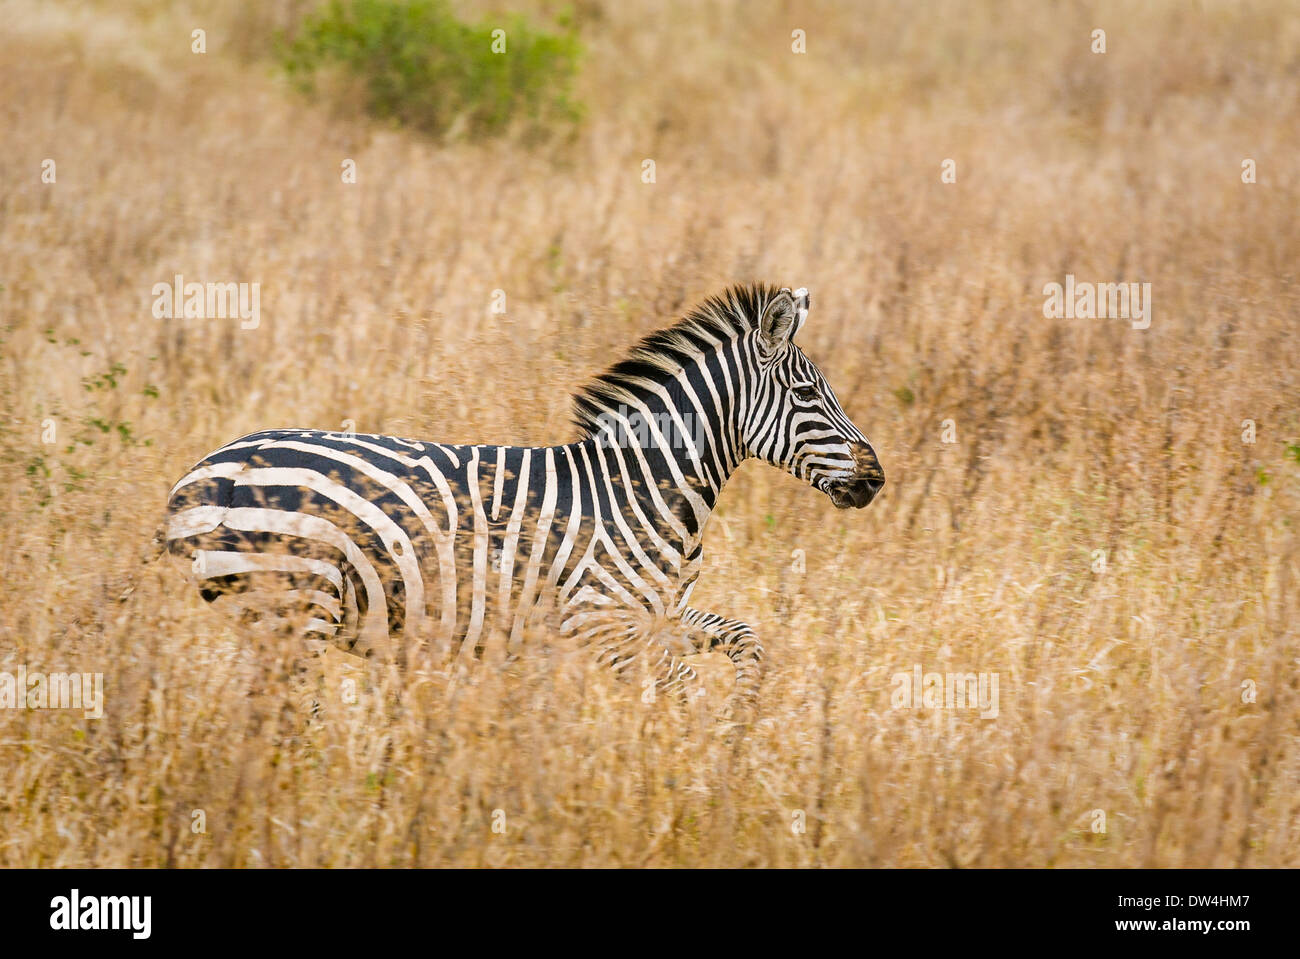 Zebra trotting through tall grass. Stock Photo